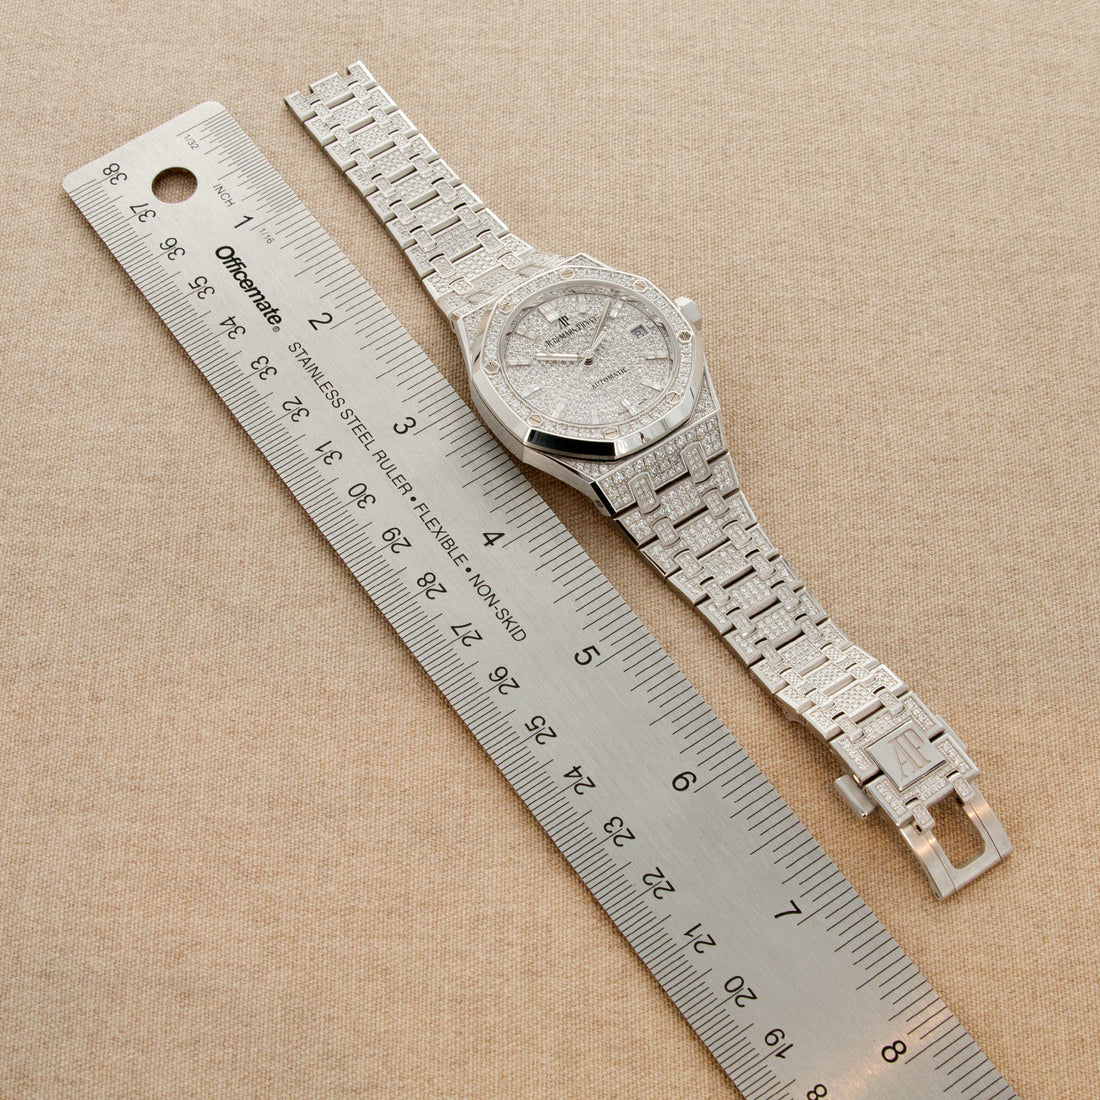 Audemars Piguet Royal Oak Automatic Diamond Watch 15452BC.ZZ.1258BC.01 for  Women